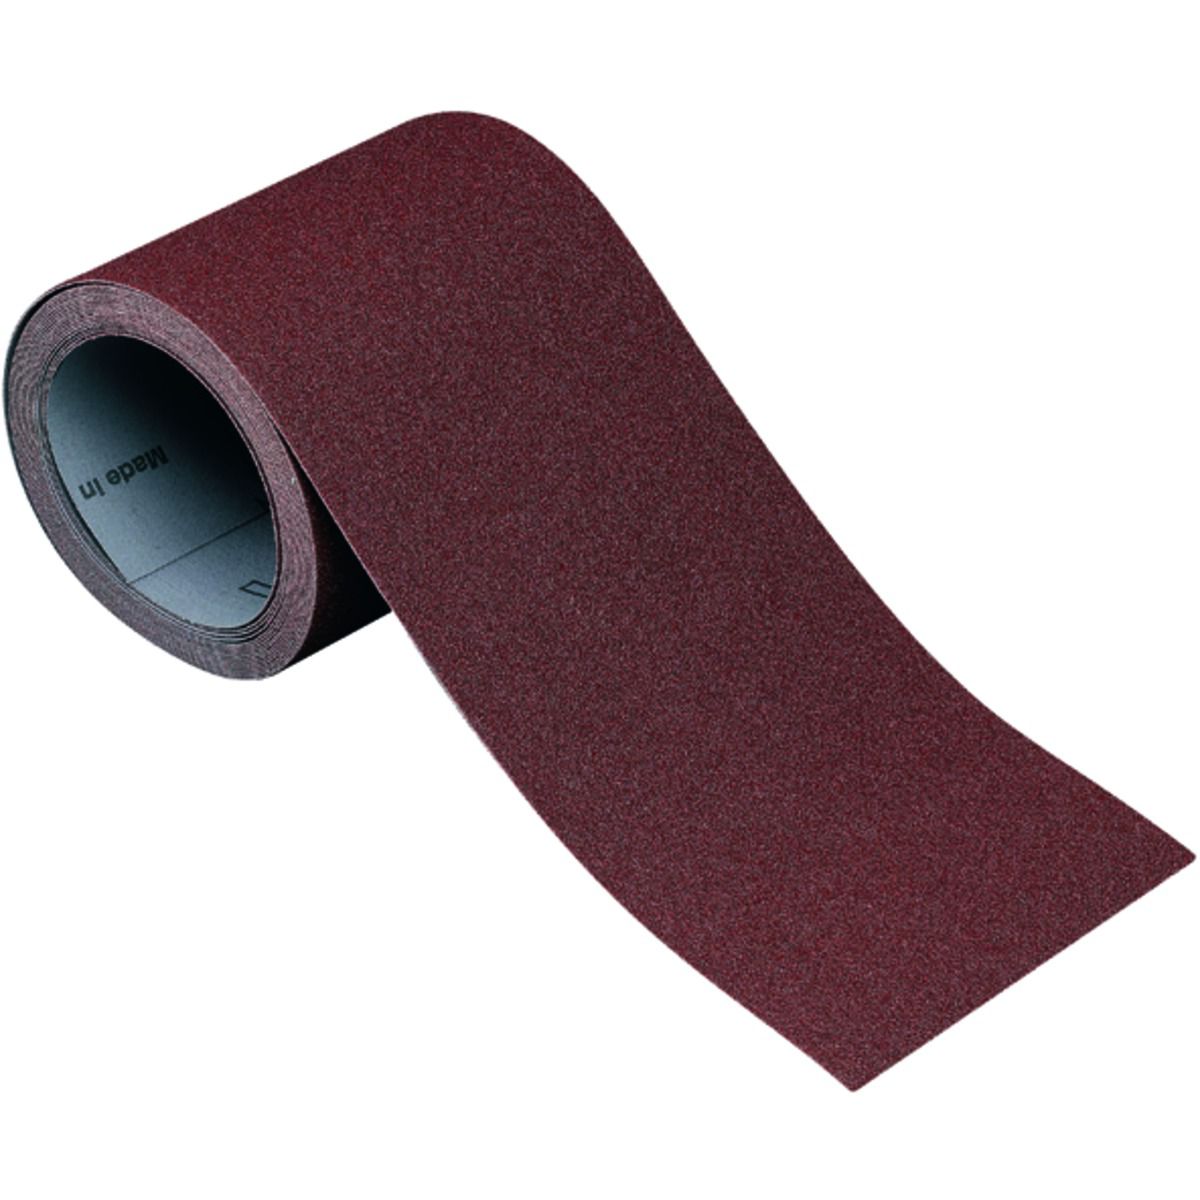 Image of Wickes Aluminium Oxide Cloth-Backed Medium Sandpaper Roll - 5m